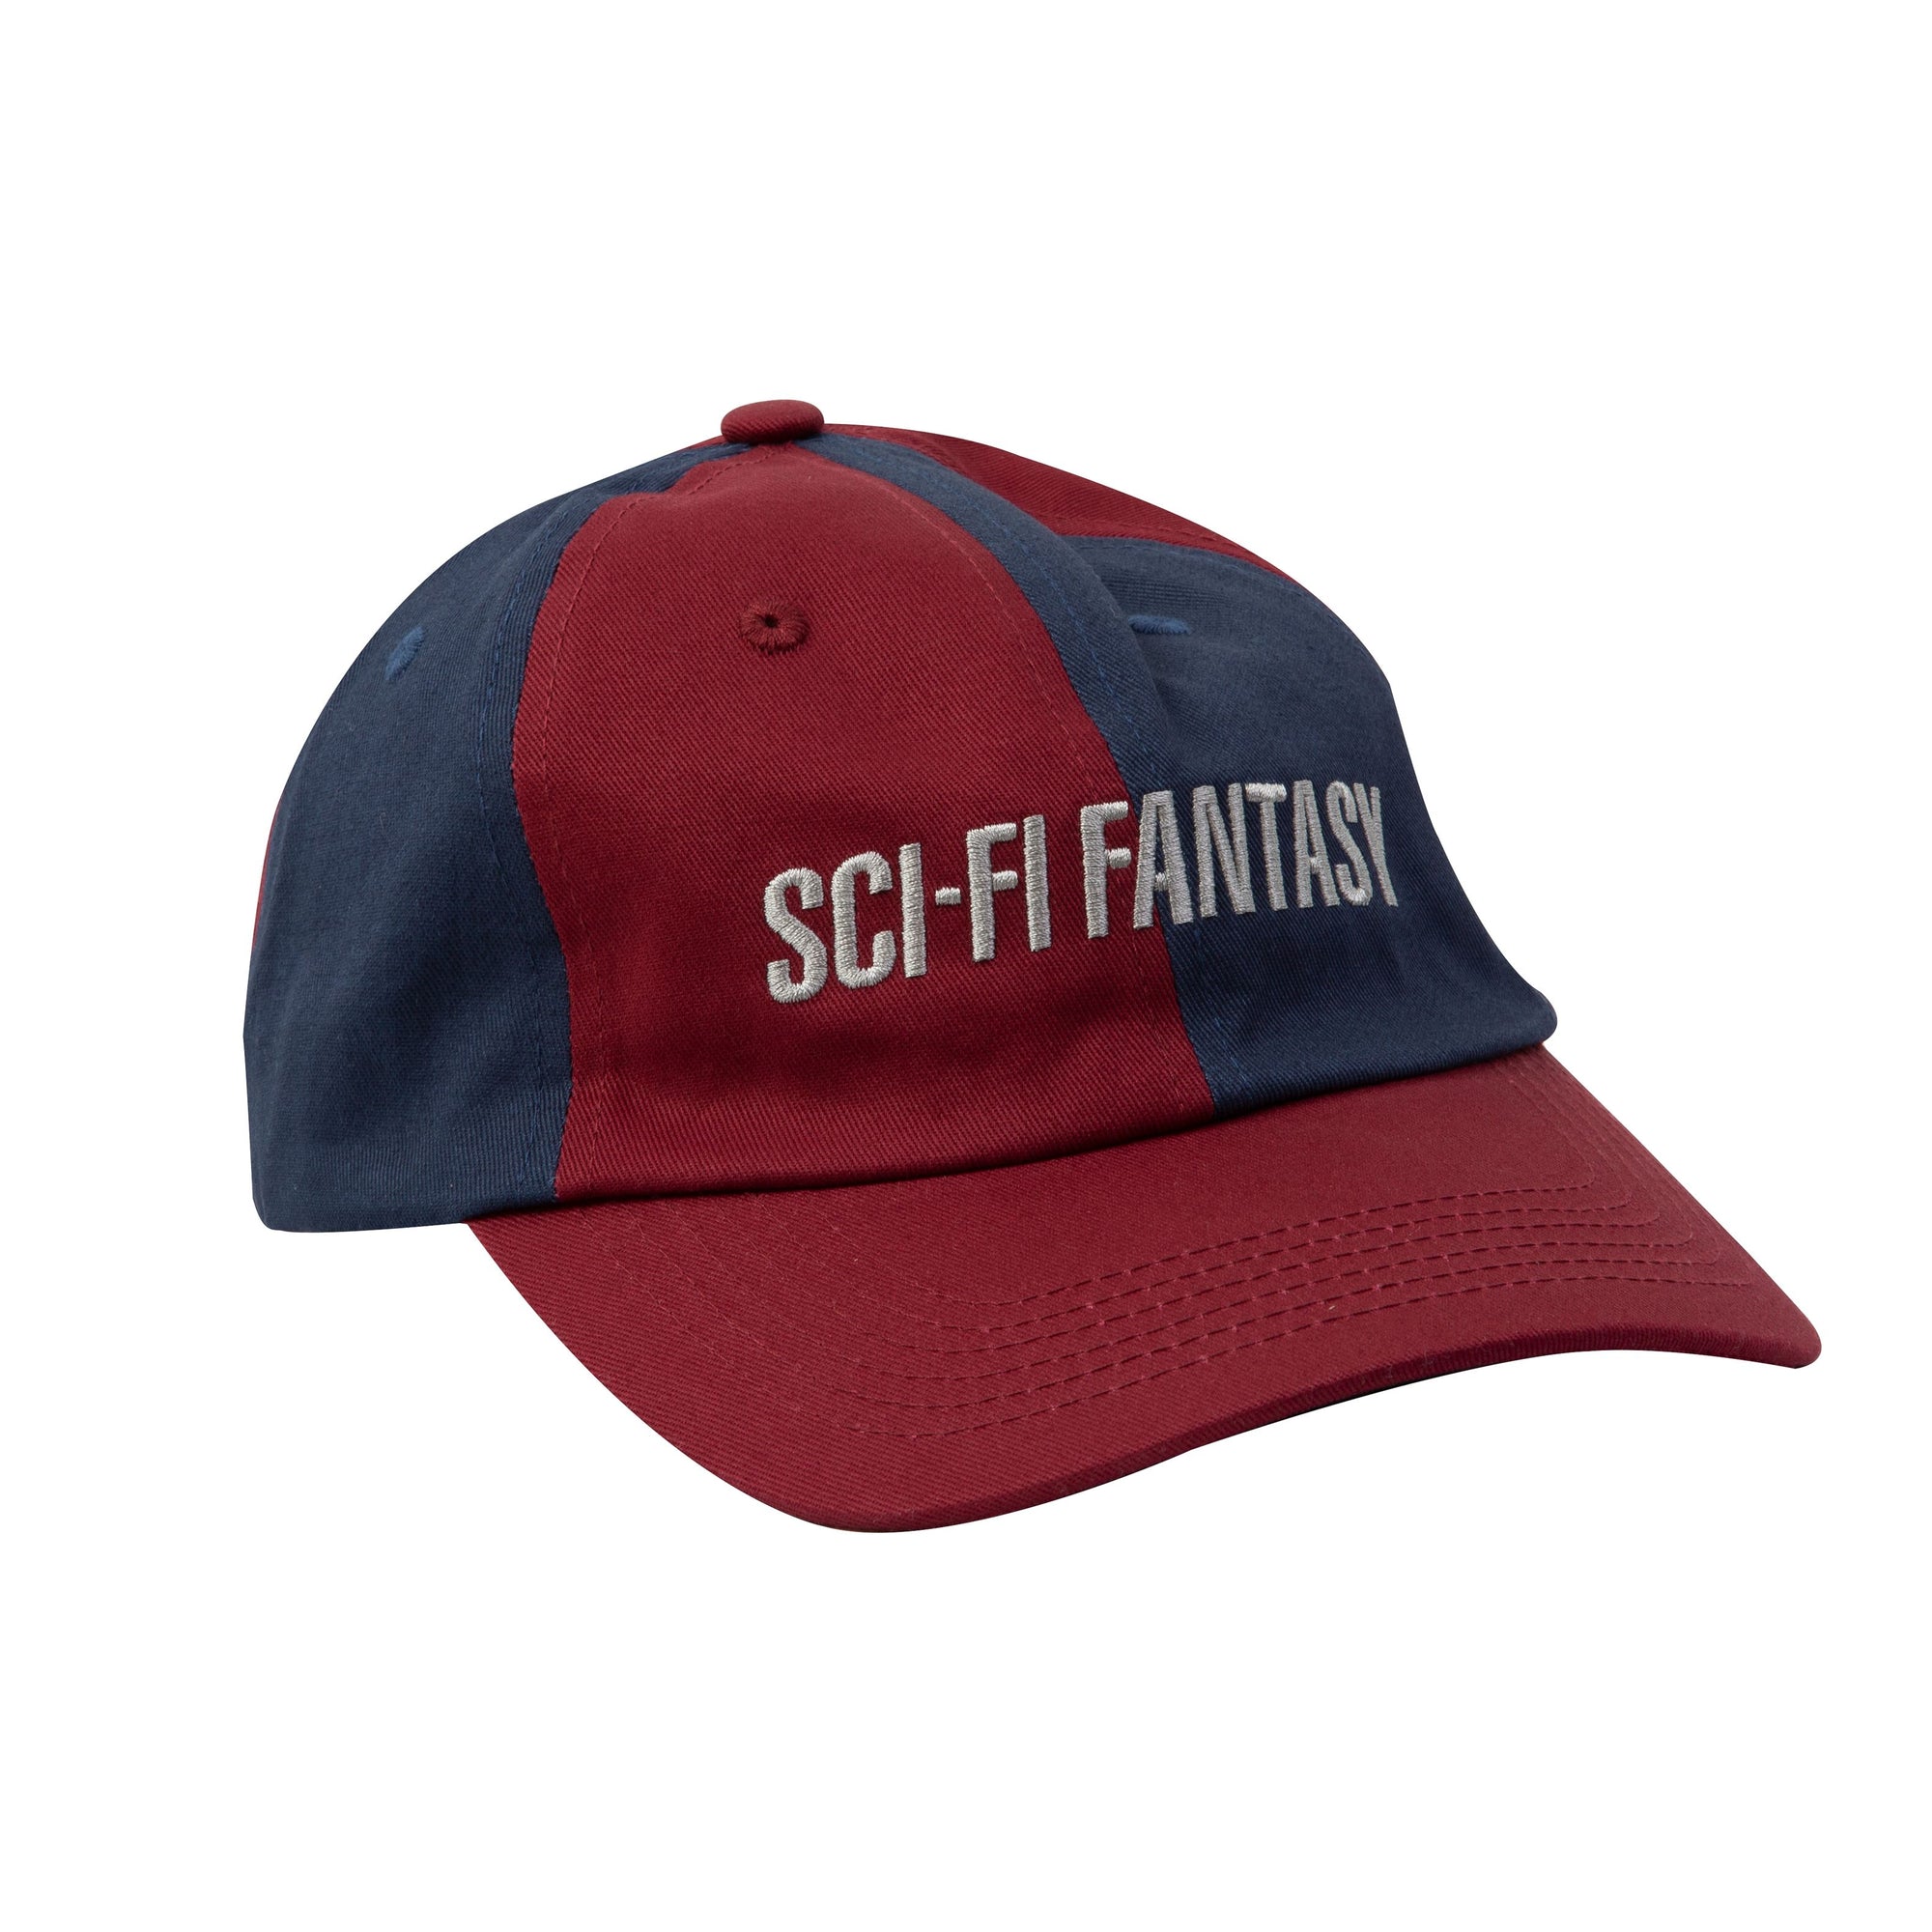 Sci-Fi Fantasy 2 Tone Hat Wine/Navy hats Sci-Fi Fantasy 